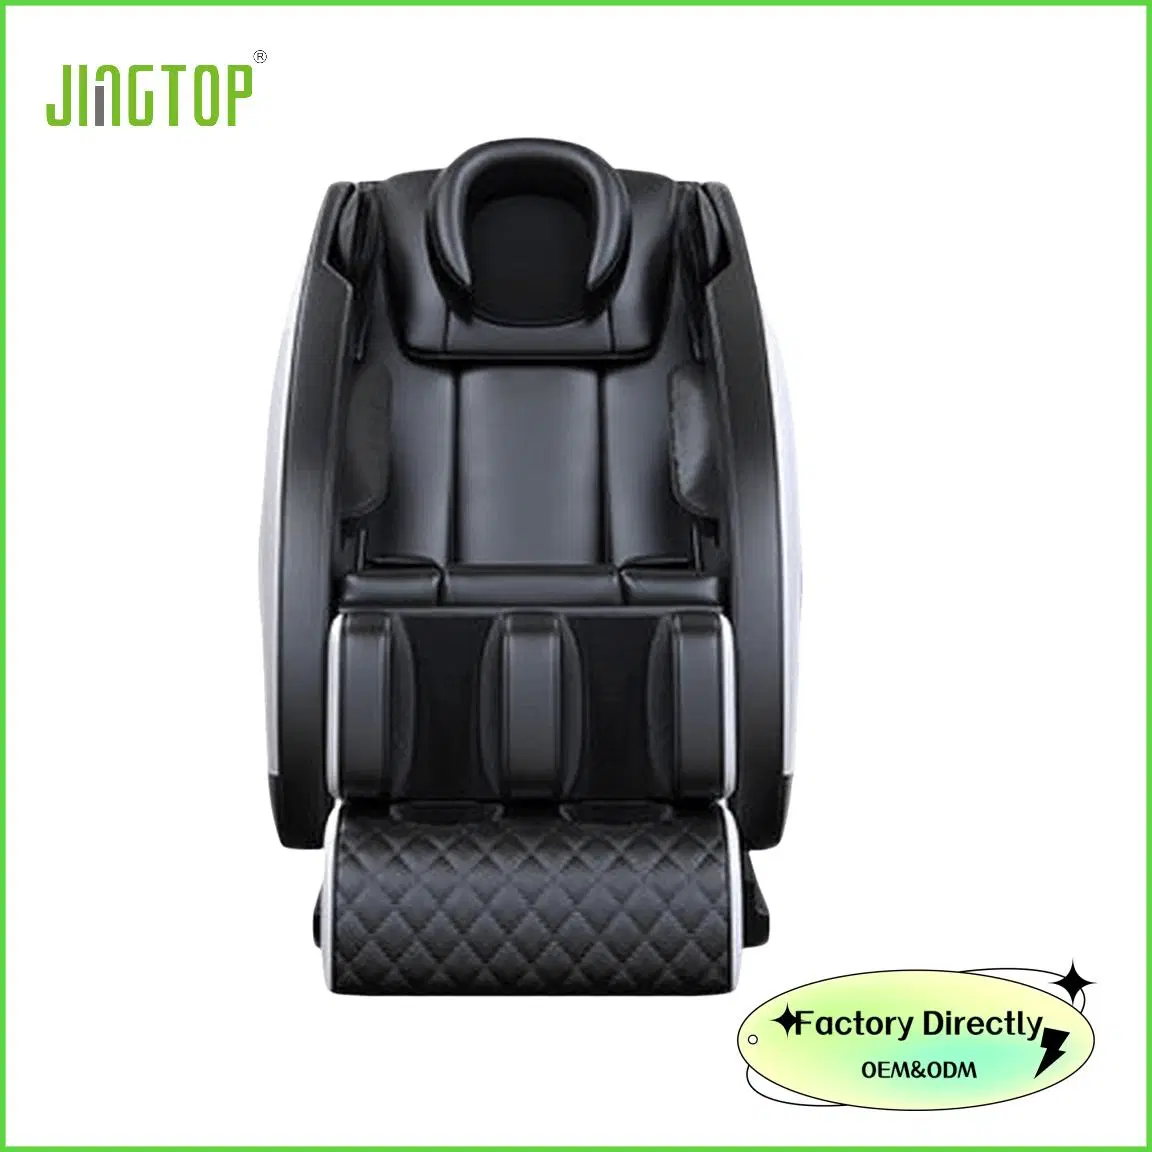 Jingtop OEM Cheap Price Full Body Massage Bluetooth Massage Office Chair